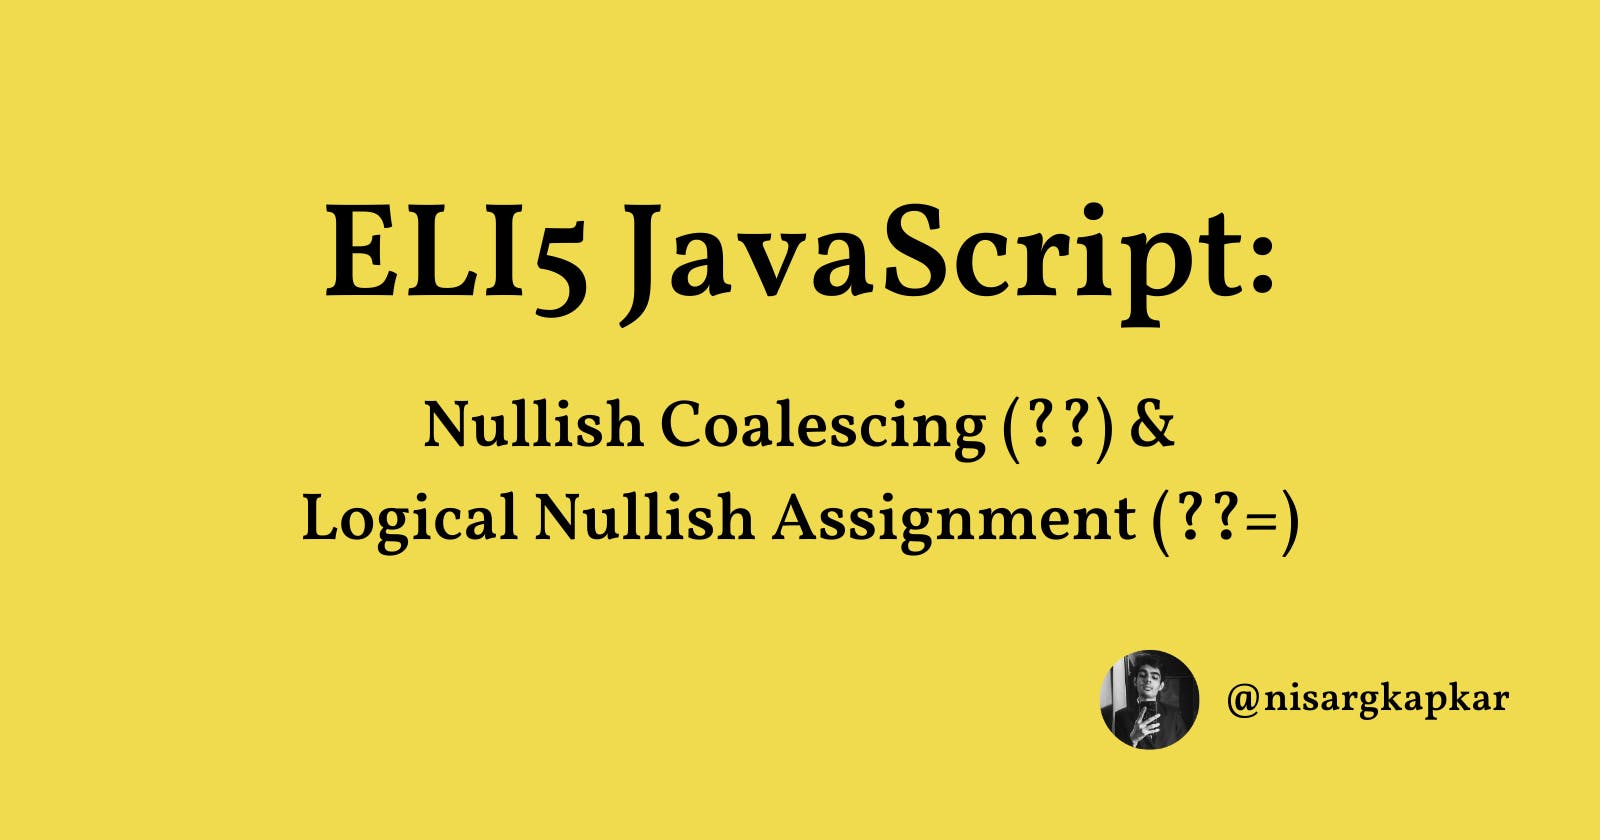 ELI5 JavaScript: Nullish Coalescing (??) & Logical Nullish Assignment (??=)